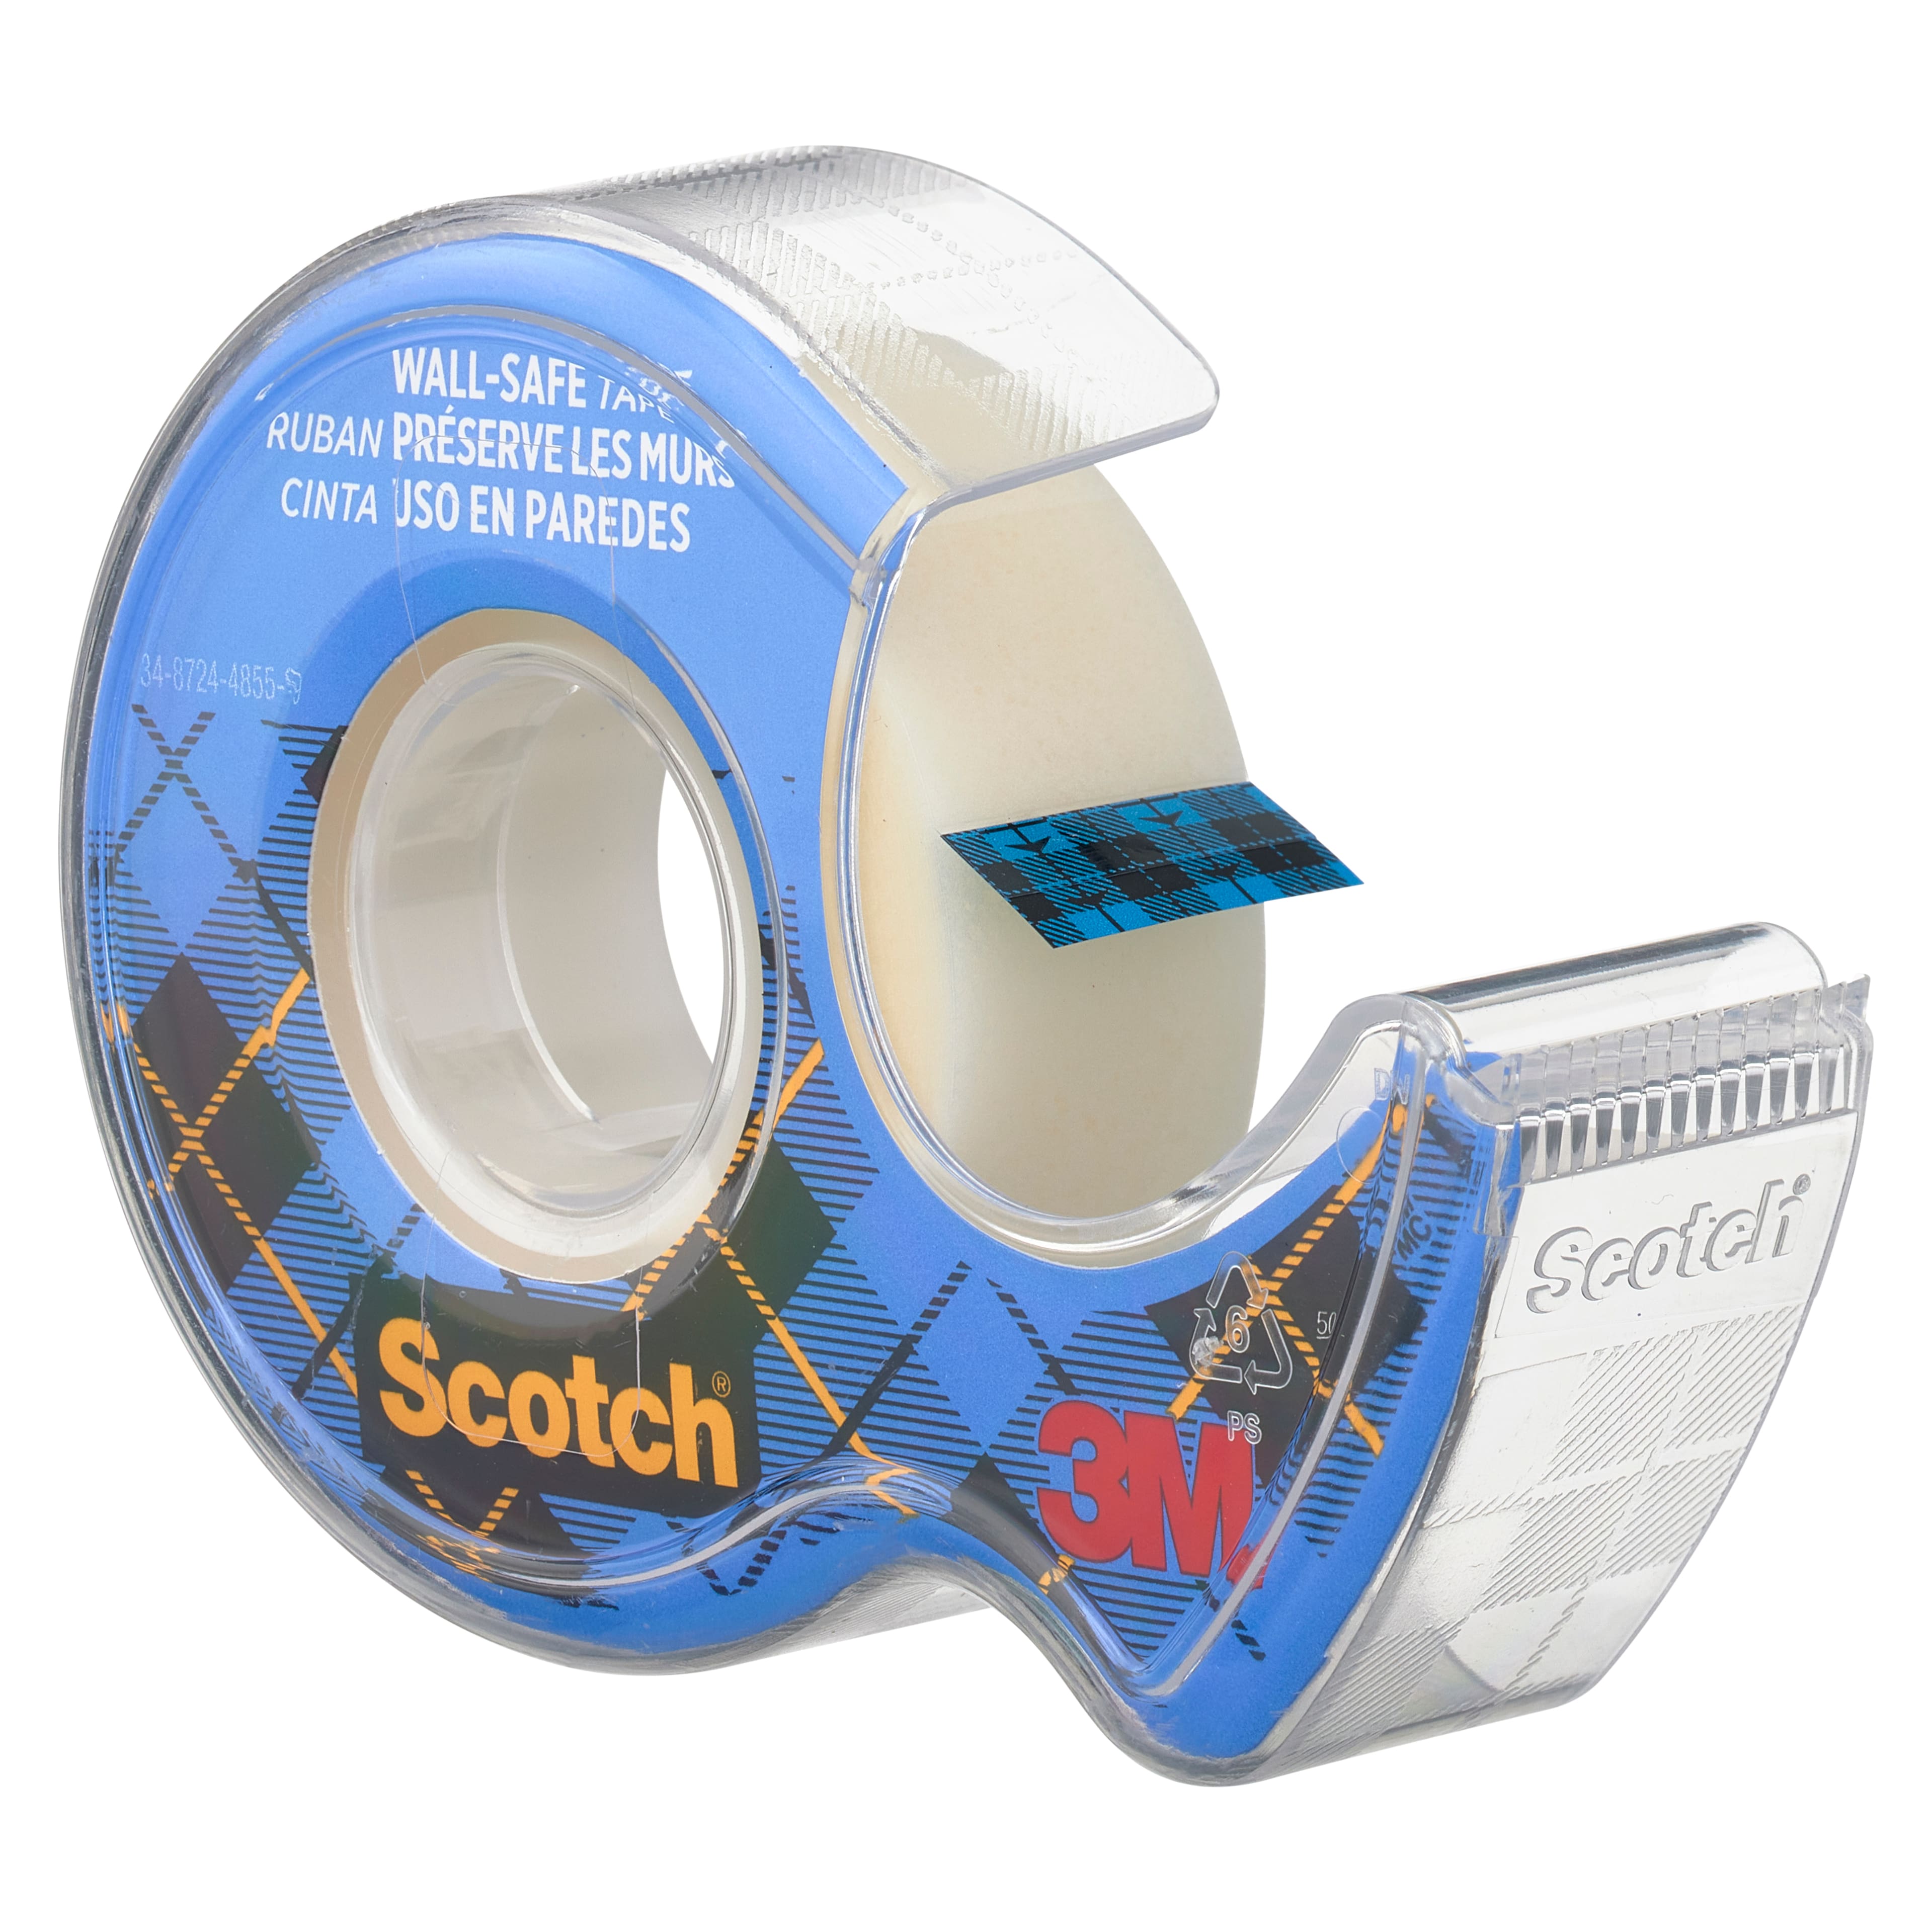 12 Pack: Scotch® Wall-Safe Tape